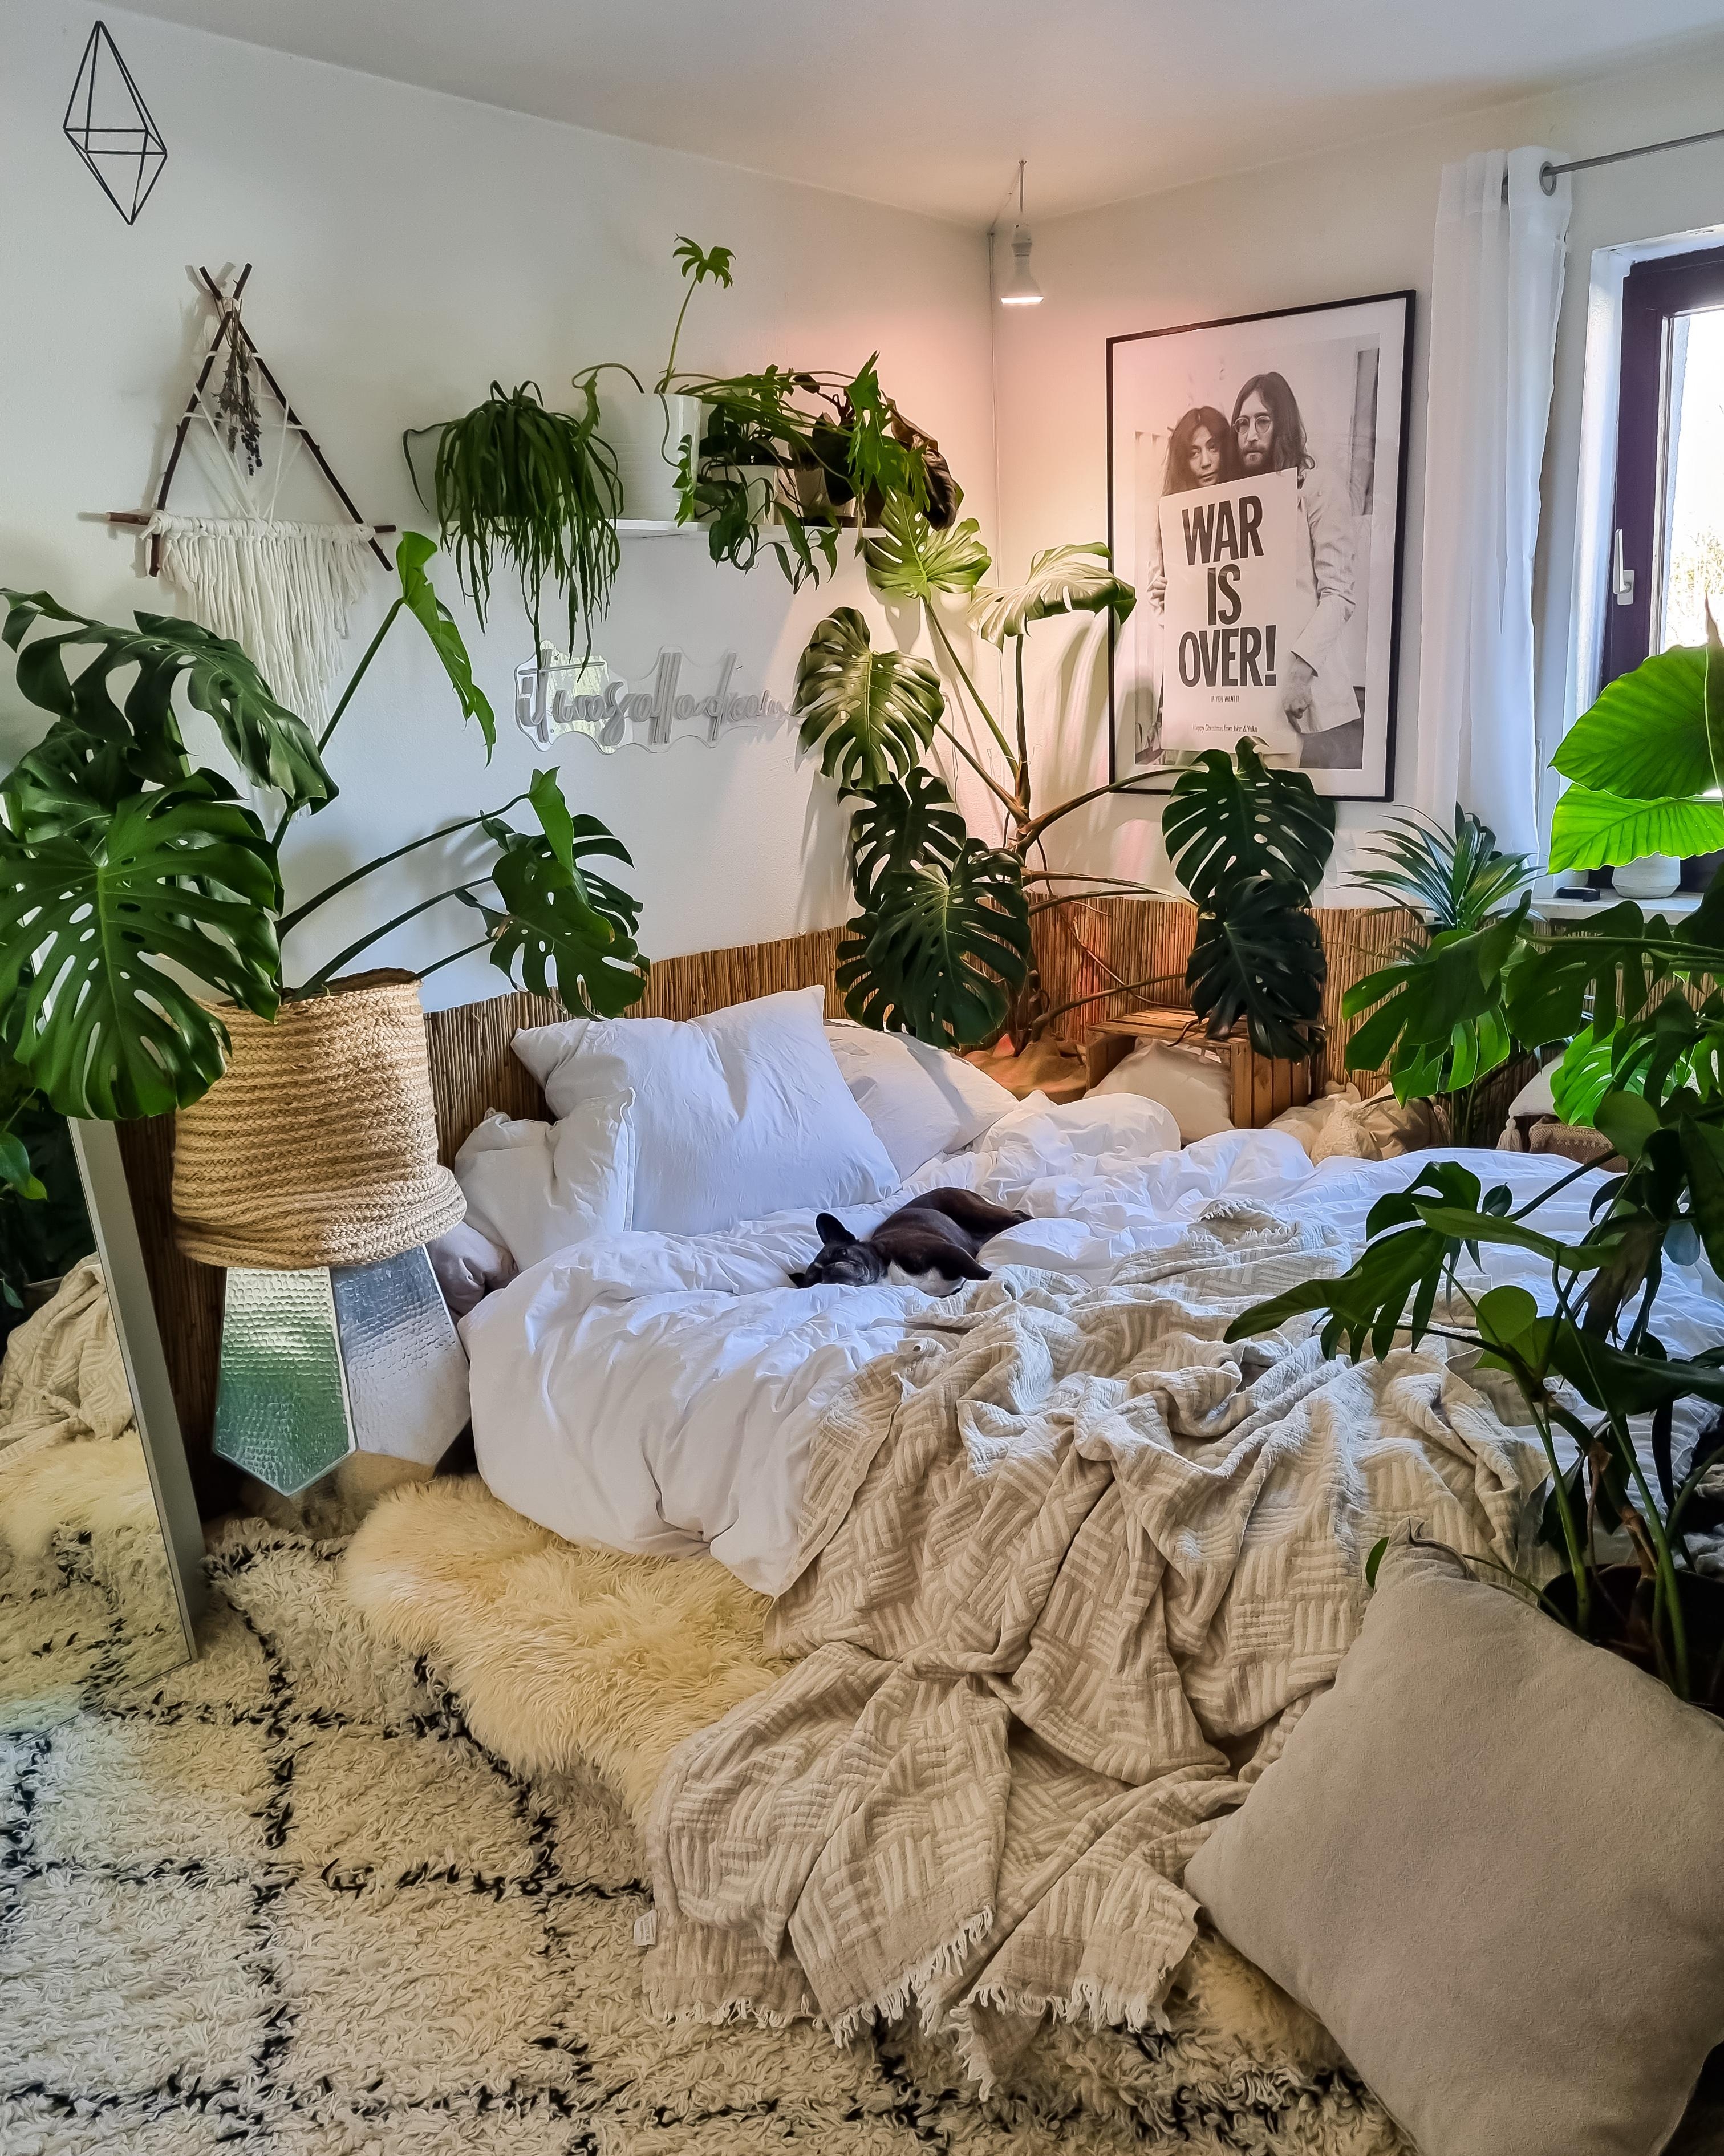 Träumen #Schlafzimmer #Wohnung #Paletten #bett #palettenbett #Pflanzen #Monstera #Teppich #Fell #Poster #Galerie 